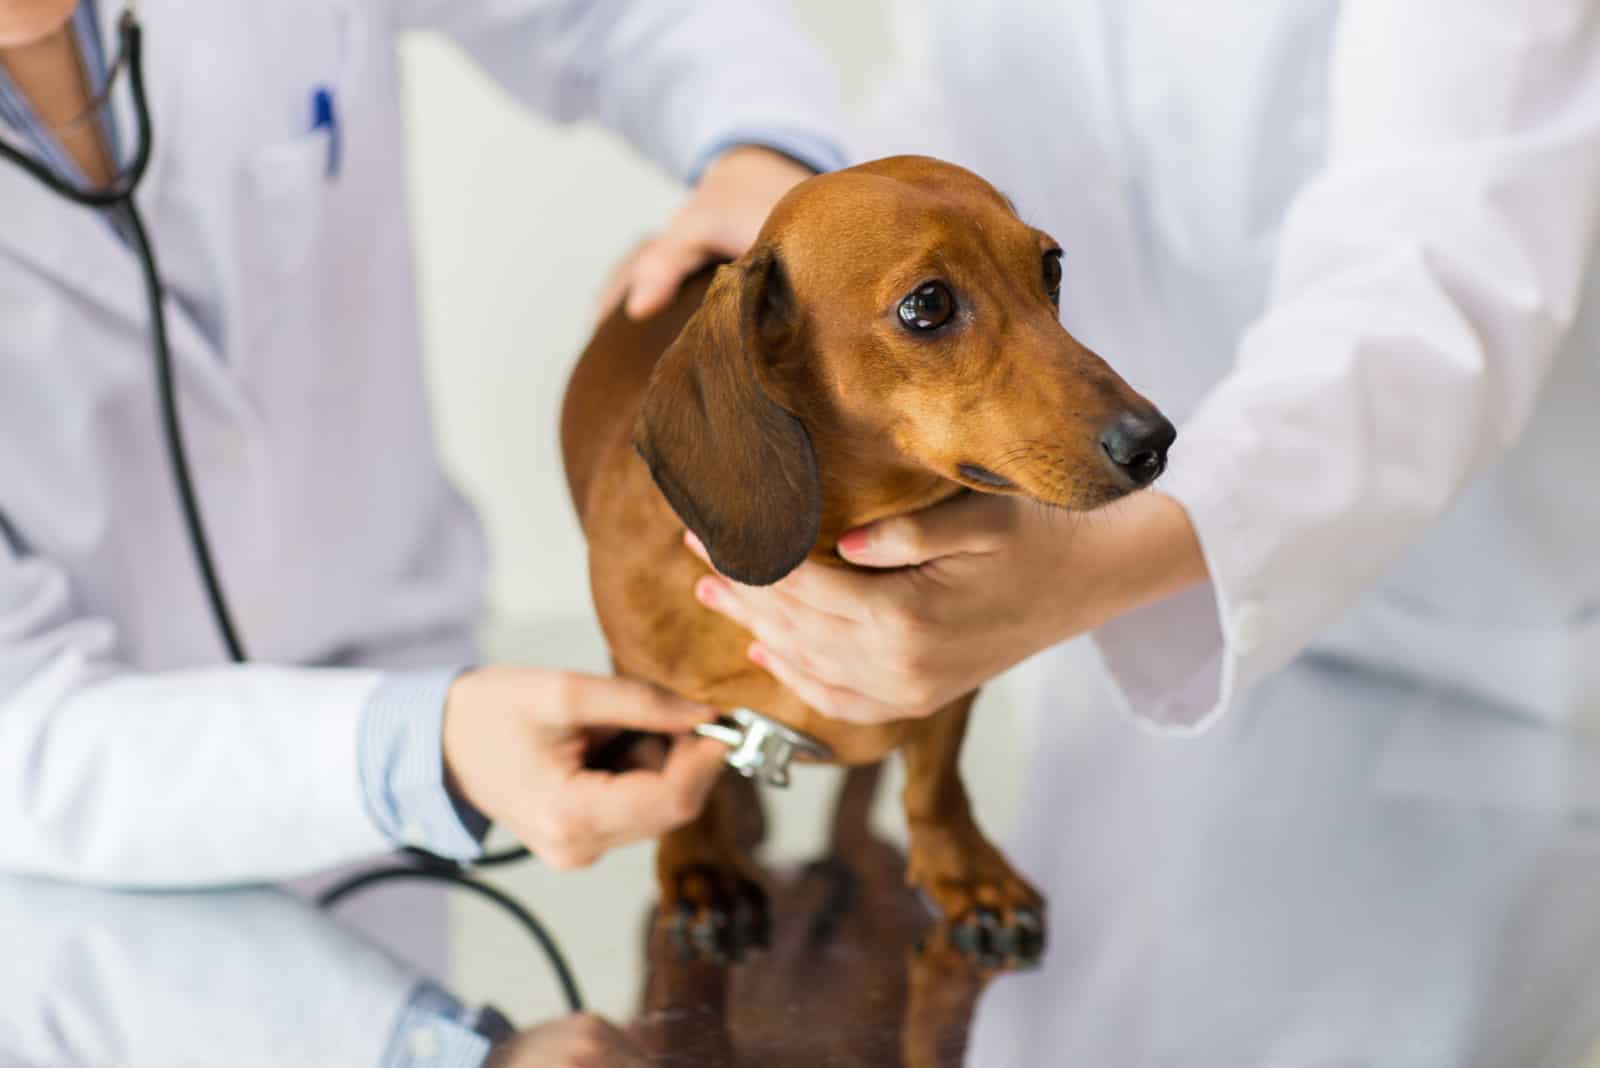 vet doctor examining dachshund dog at vet clinic